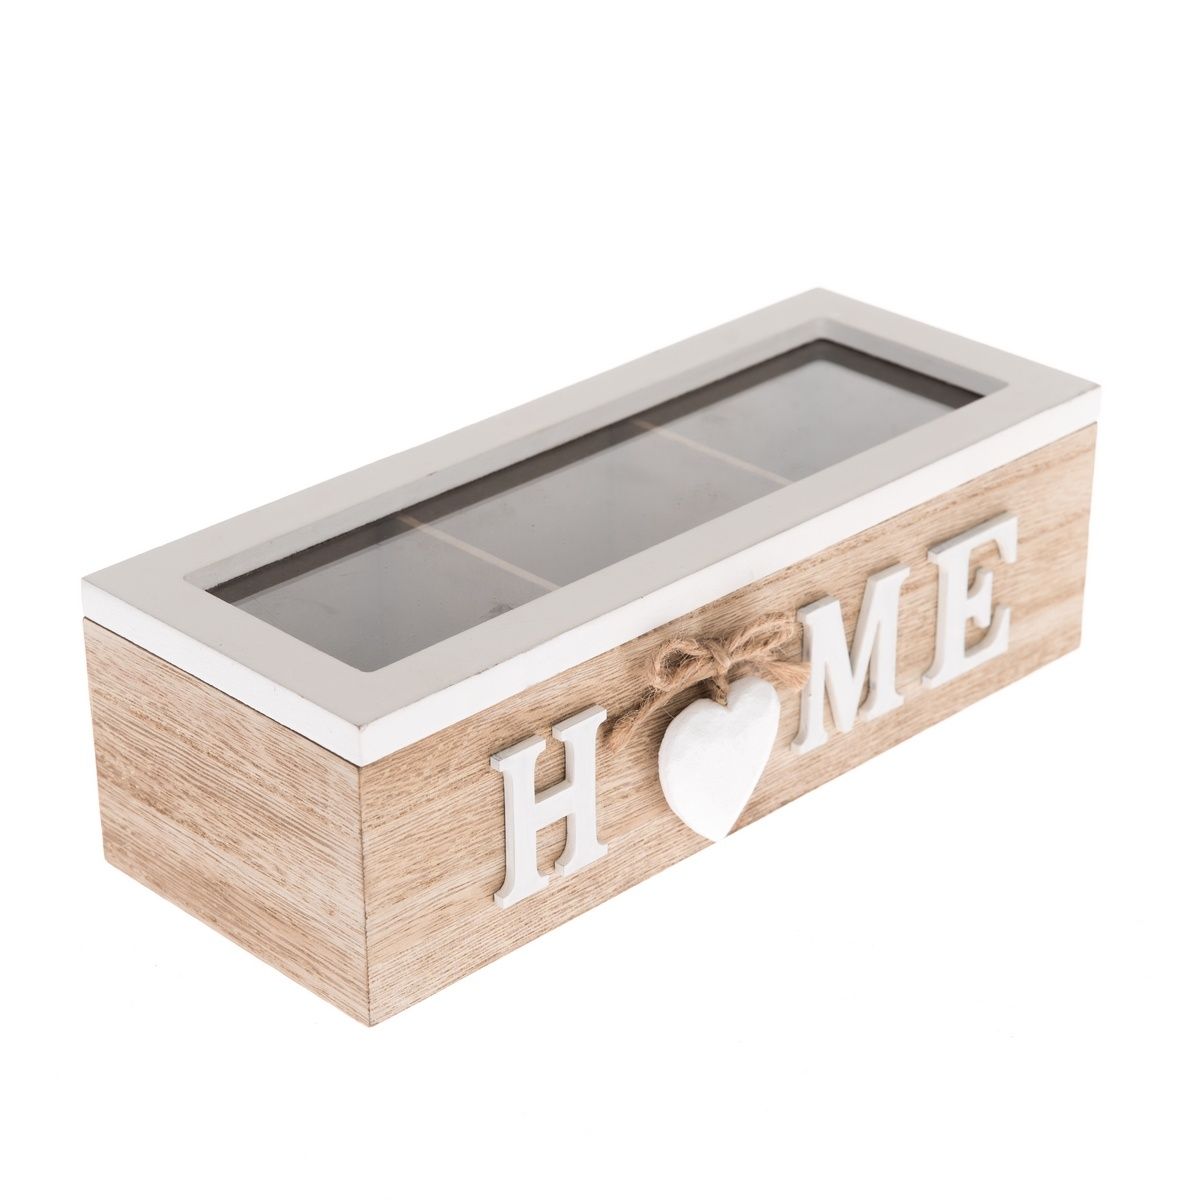 Dřevěný dekorační box Heart in home, 23 x 10 x 8,5 cm - 4home.cz